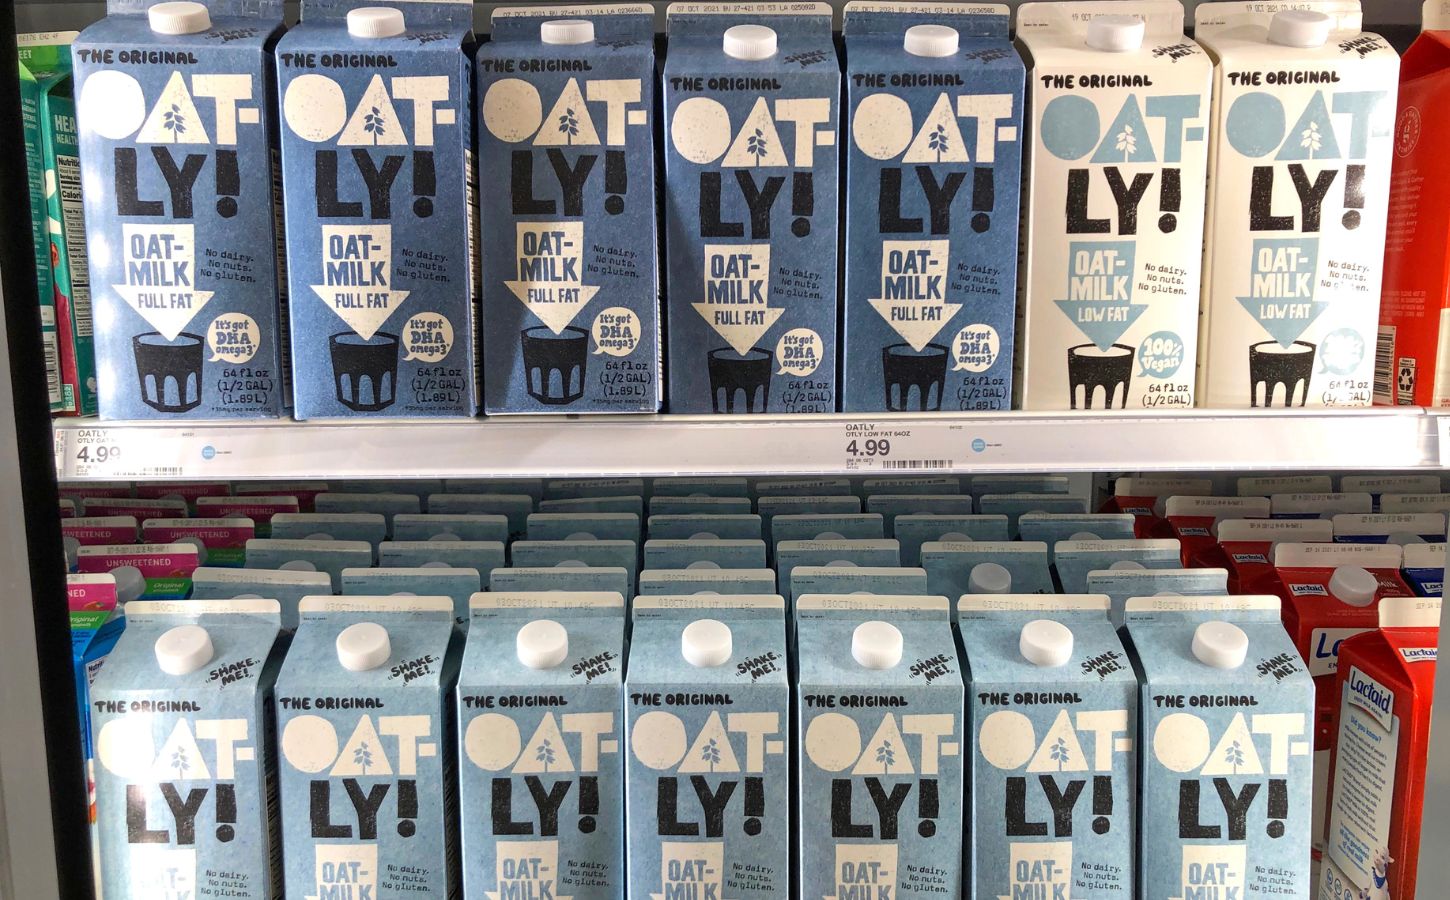 A selection of vegan Oatly oat milk drinks at a UK supermarket